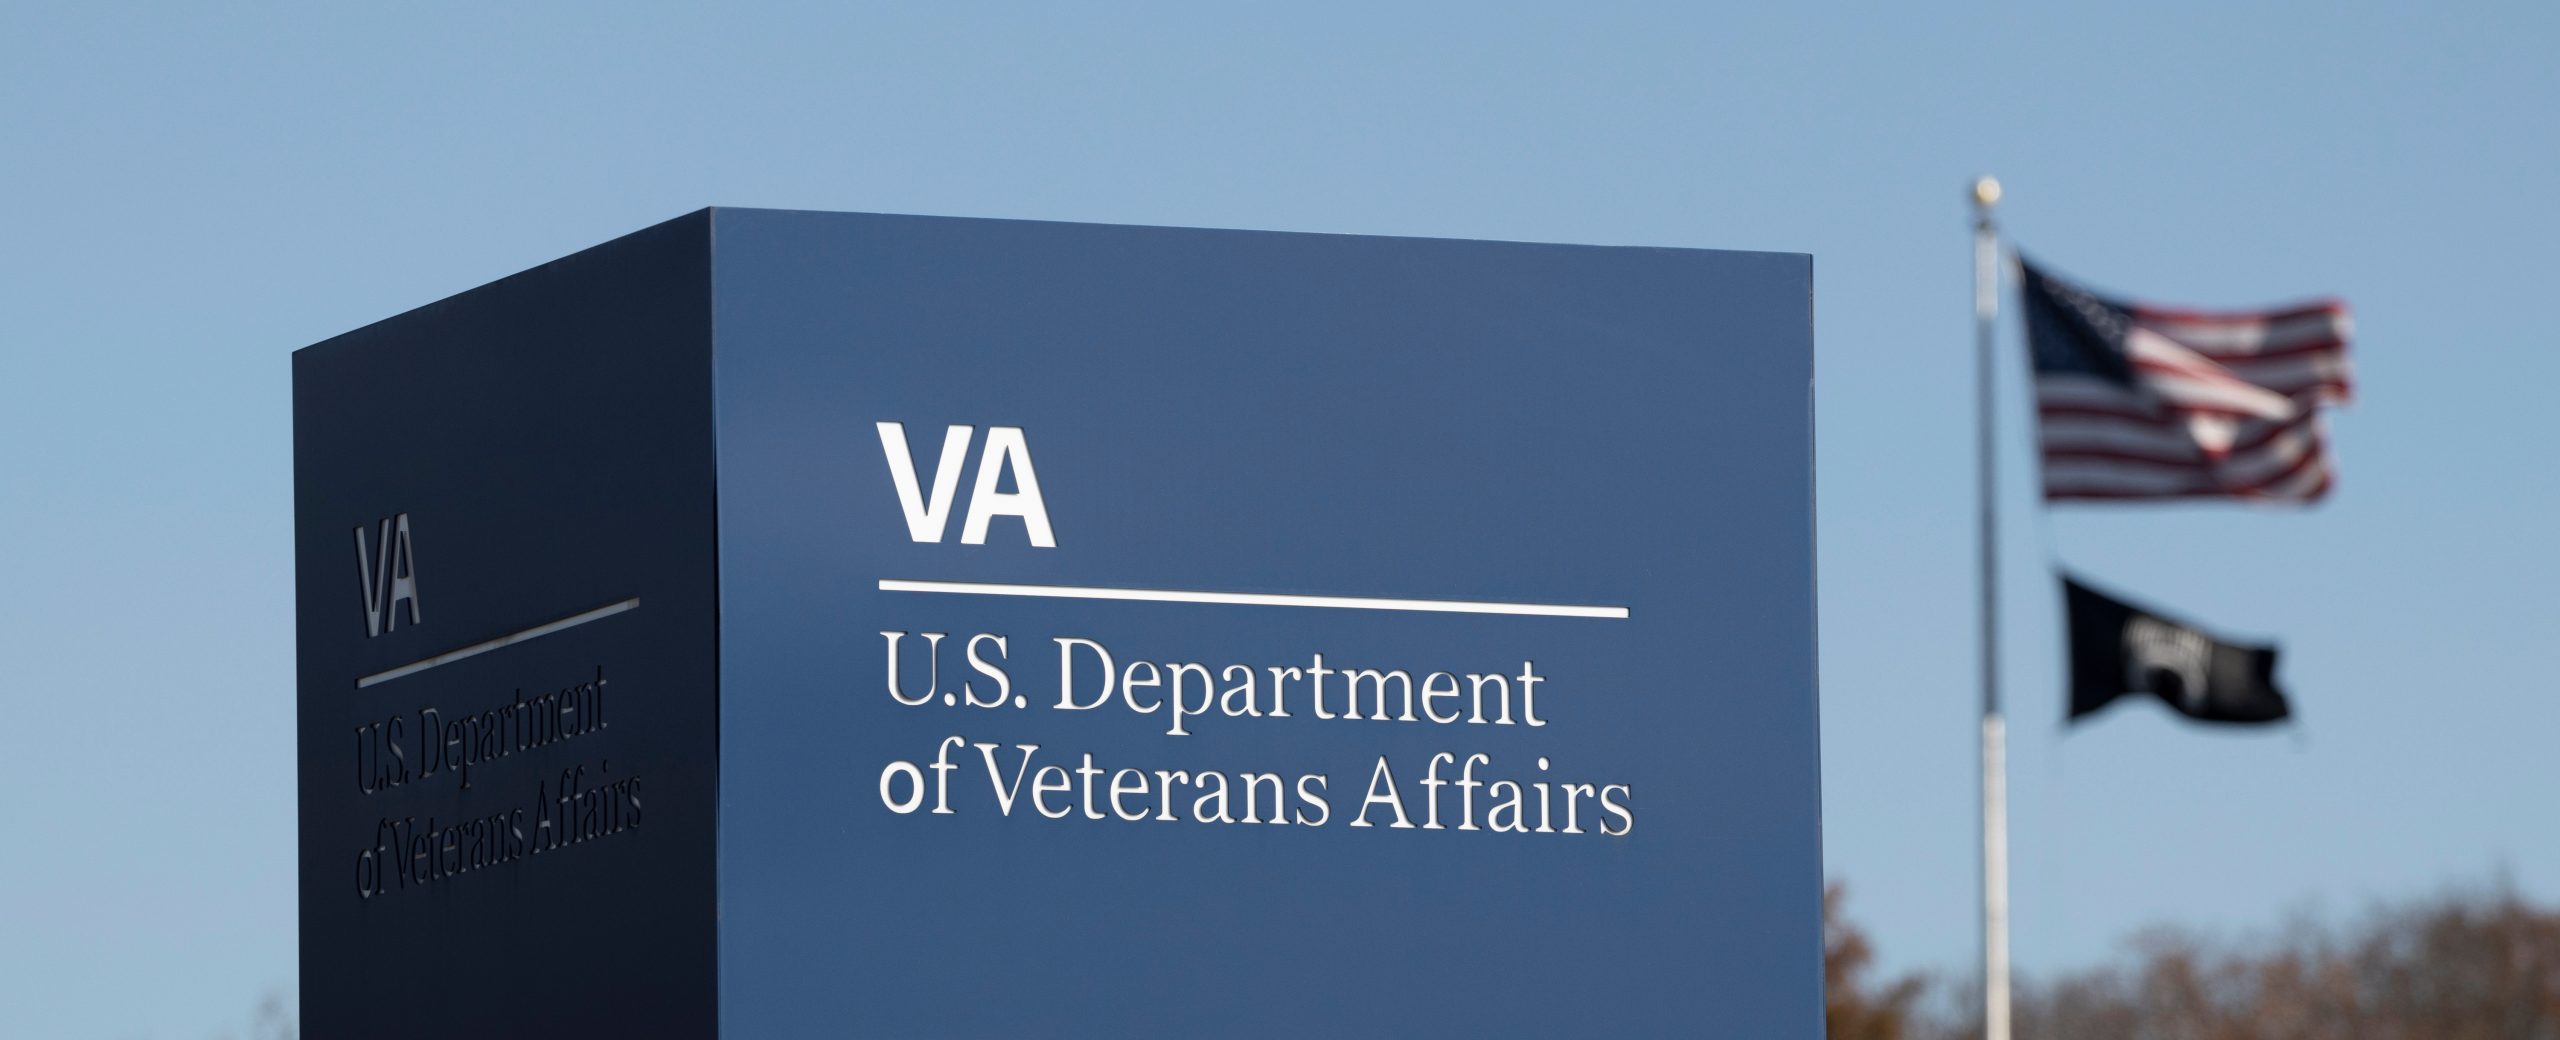 VA Puts Abortions Ahead of Caring for Veterans